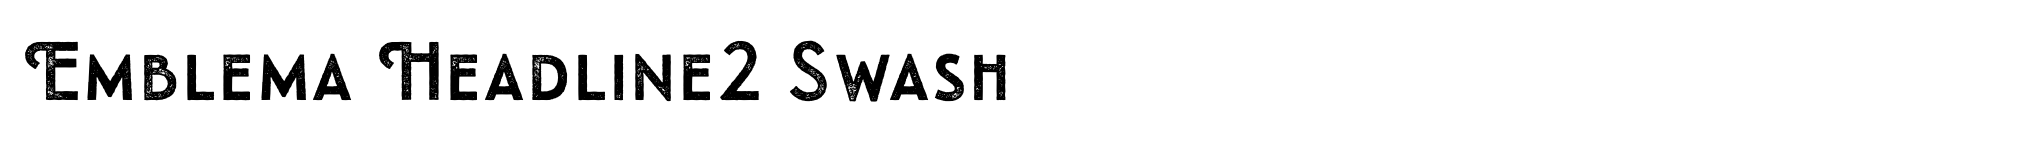 Emblema Headline2 Swash image